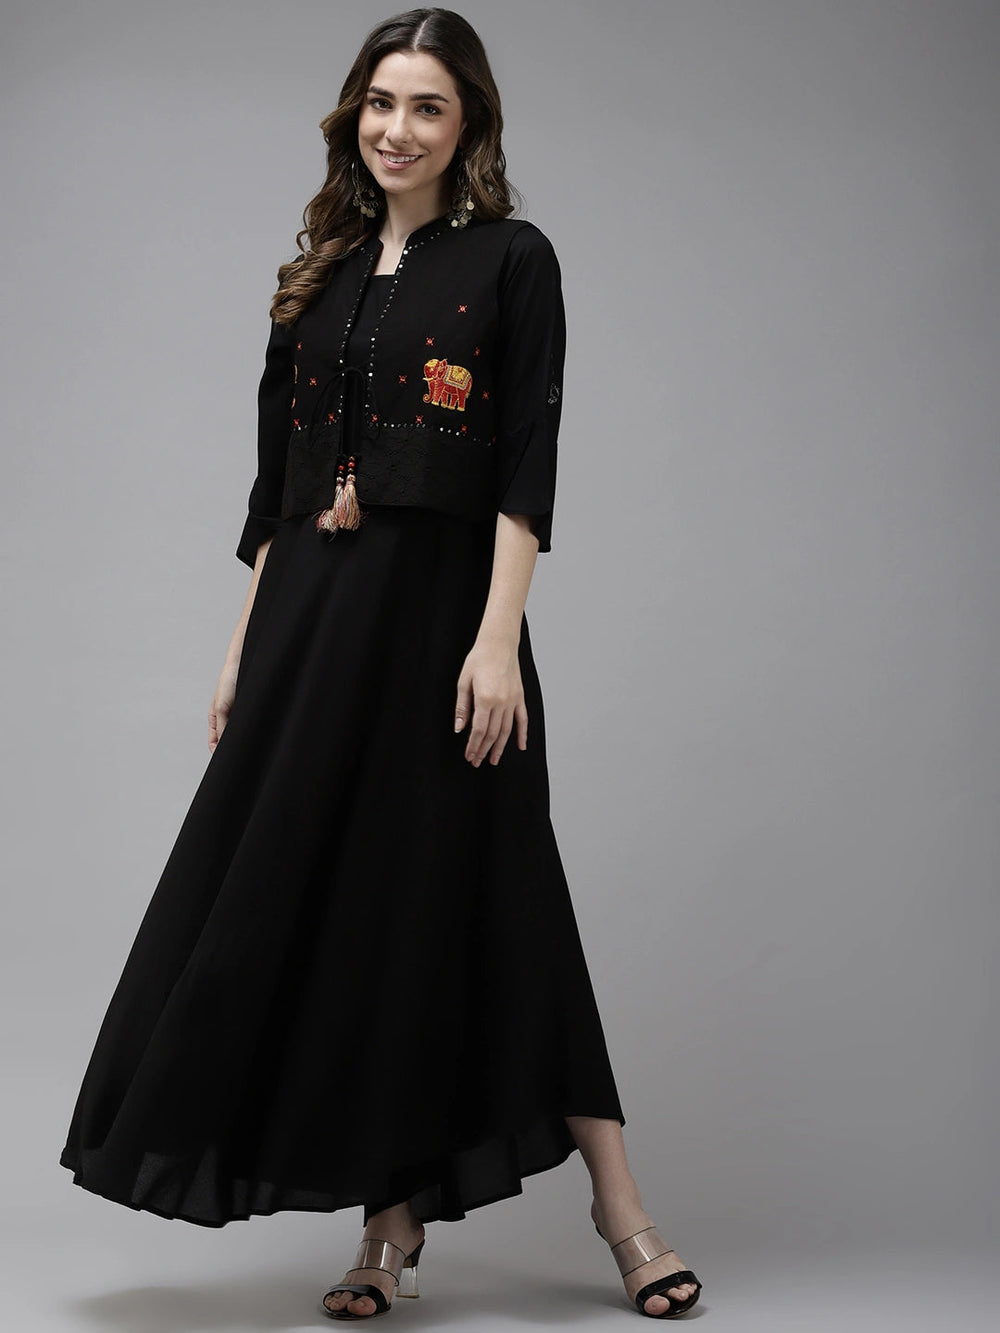 Black Midi Dress With Jacket-Yufta Store-9735DRSBKS